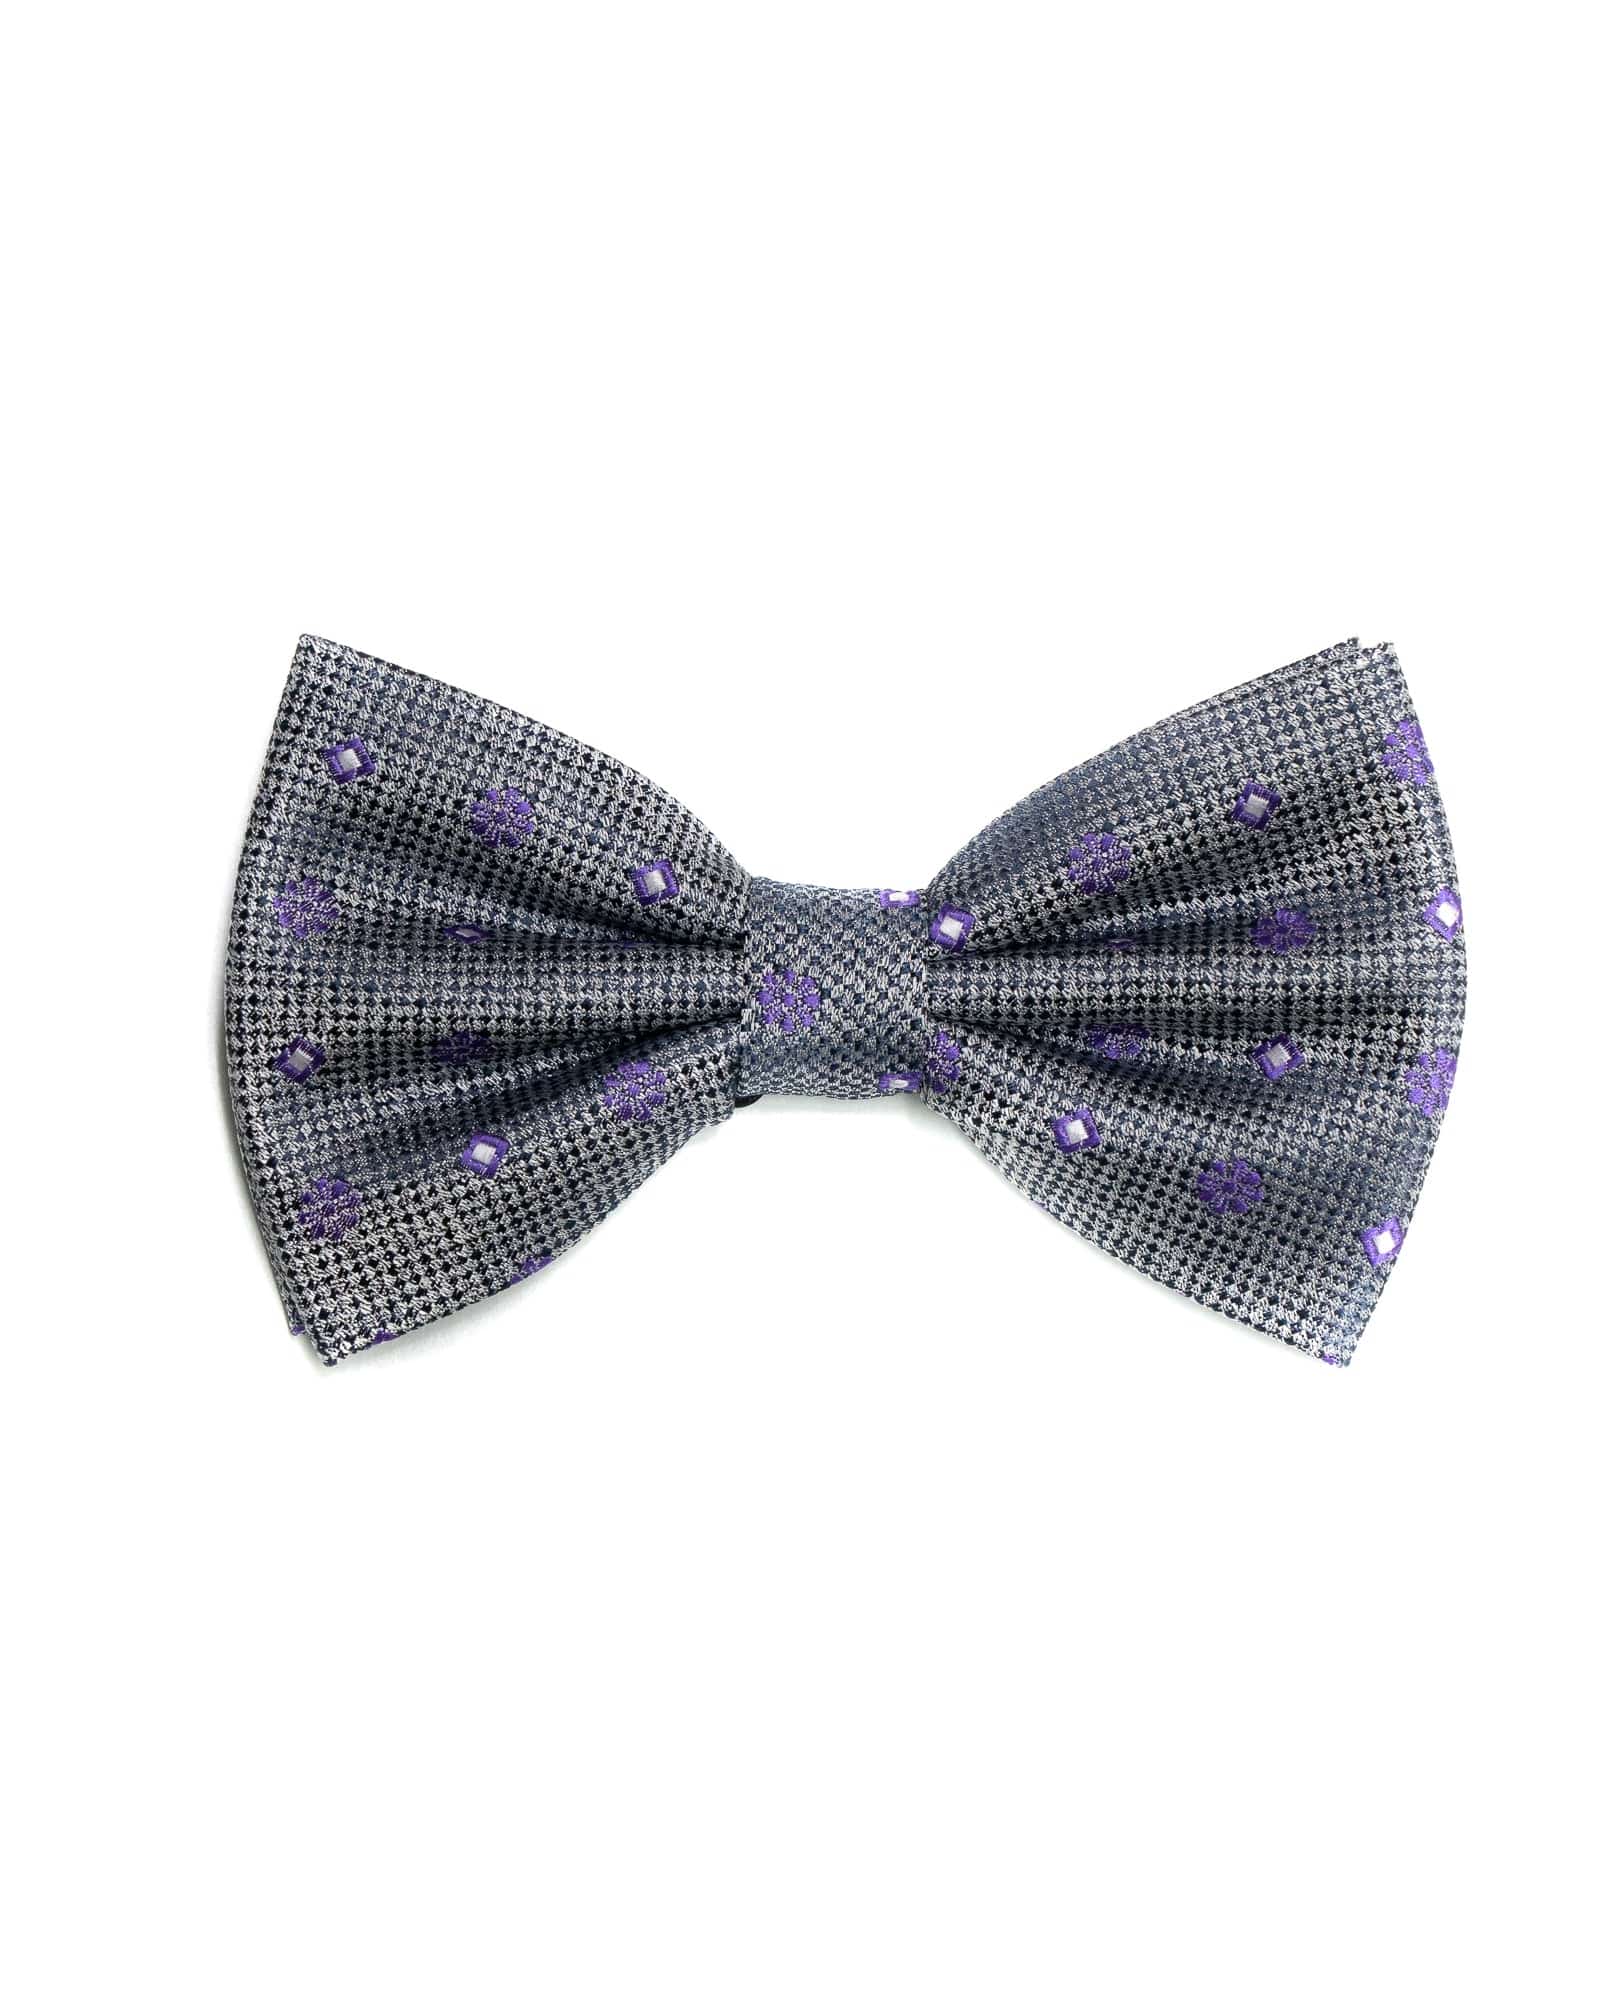 Bow Tie In Foulard Pattern Grey & Purple - Rainwater's Men's Clothing and Tuxedo Rental